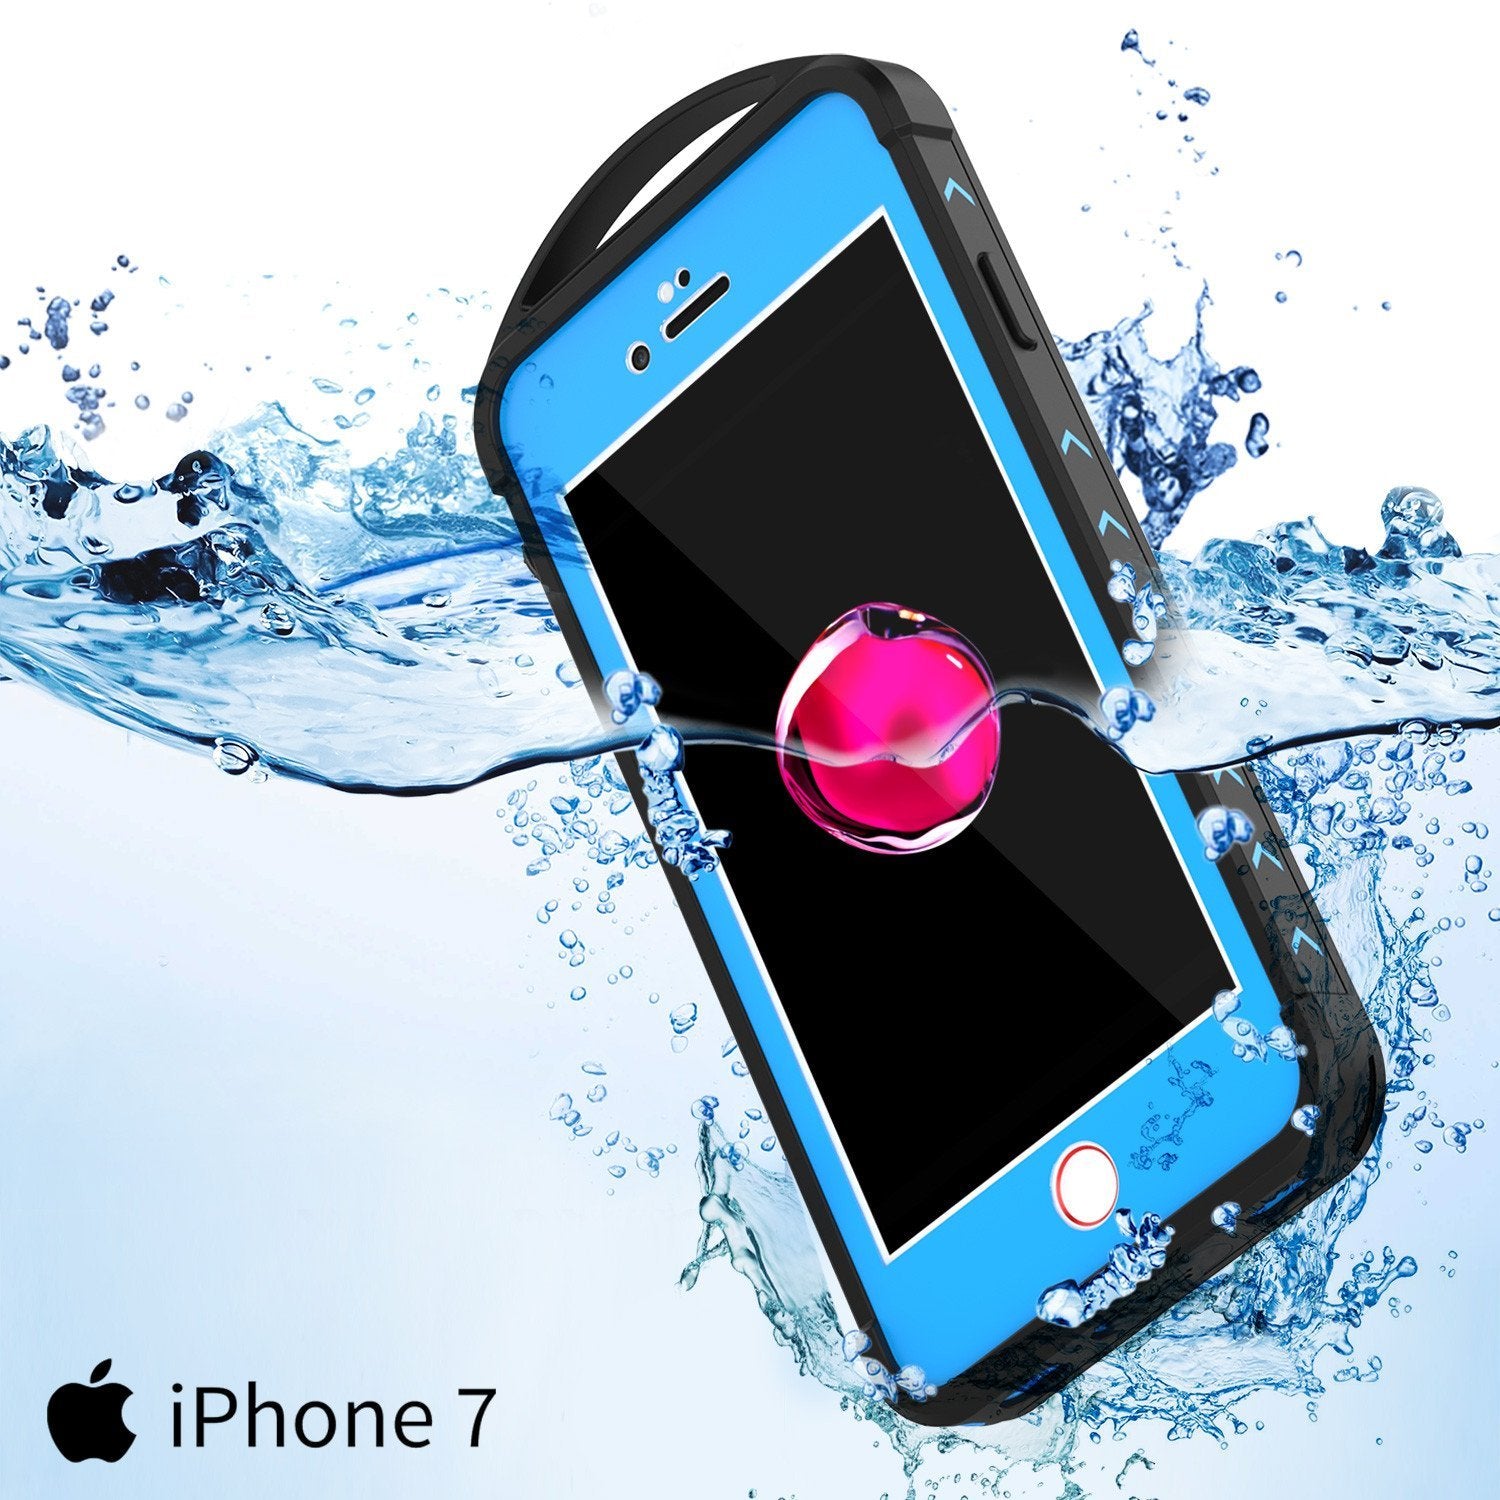 iPhone 8 Waterproof Case, Punkcase ALPINE Series, Light Blue | Heavy Duty Armor Cover